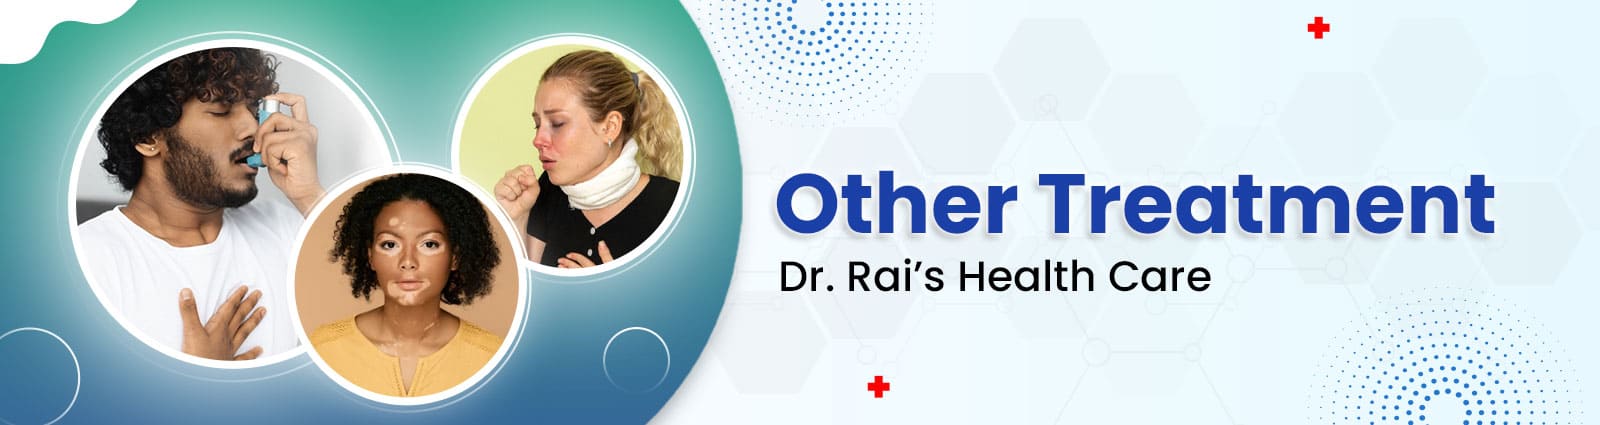 Dr. Rai’s Other Treatment